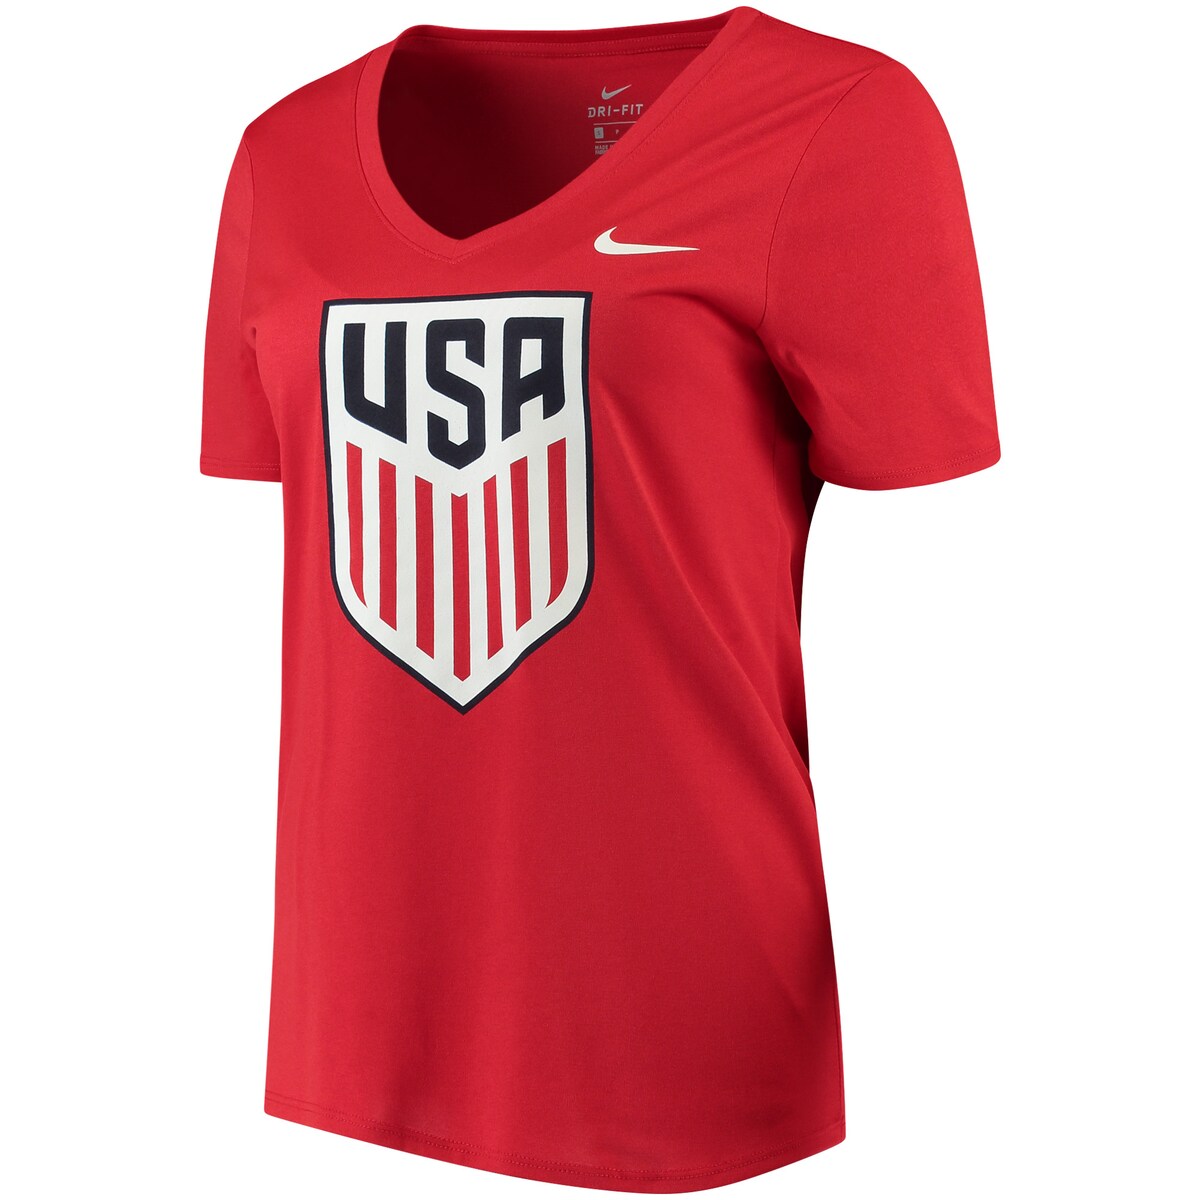 NATIONAL TEAM アメリカ代表 Tシャツ Nike ナイキ レディース レッド (BCS Women's USMNT Legend V-Neck Tee)